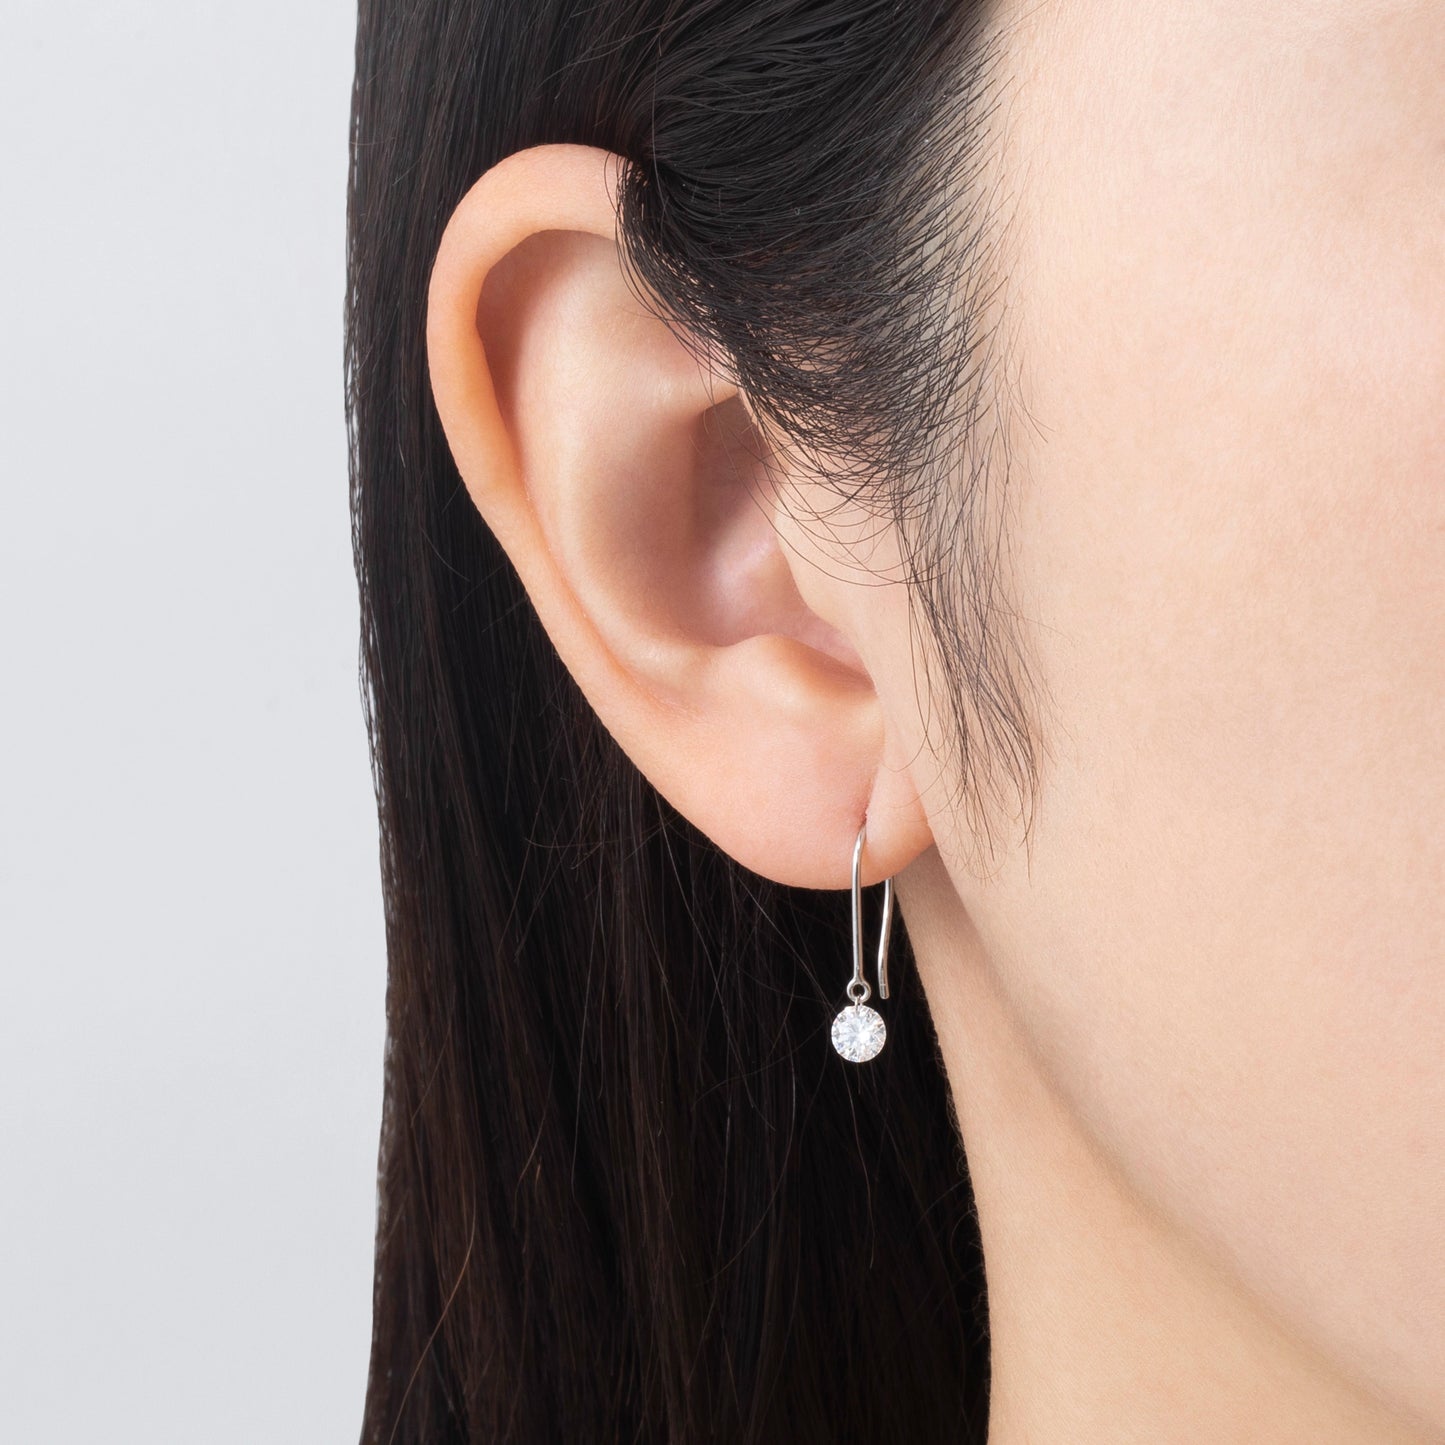 INNOCENCE1 grain earrings/ PT900 Platinum/ 0.3 Carat x 2 pieces